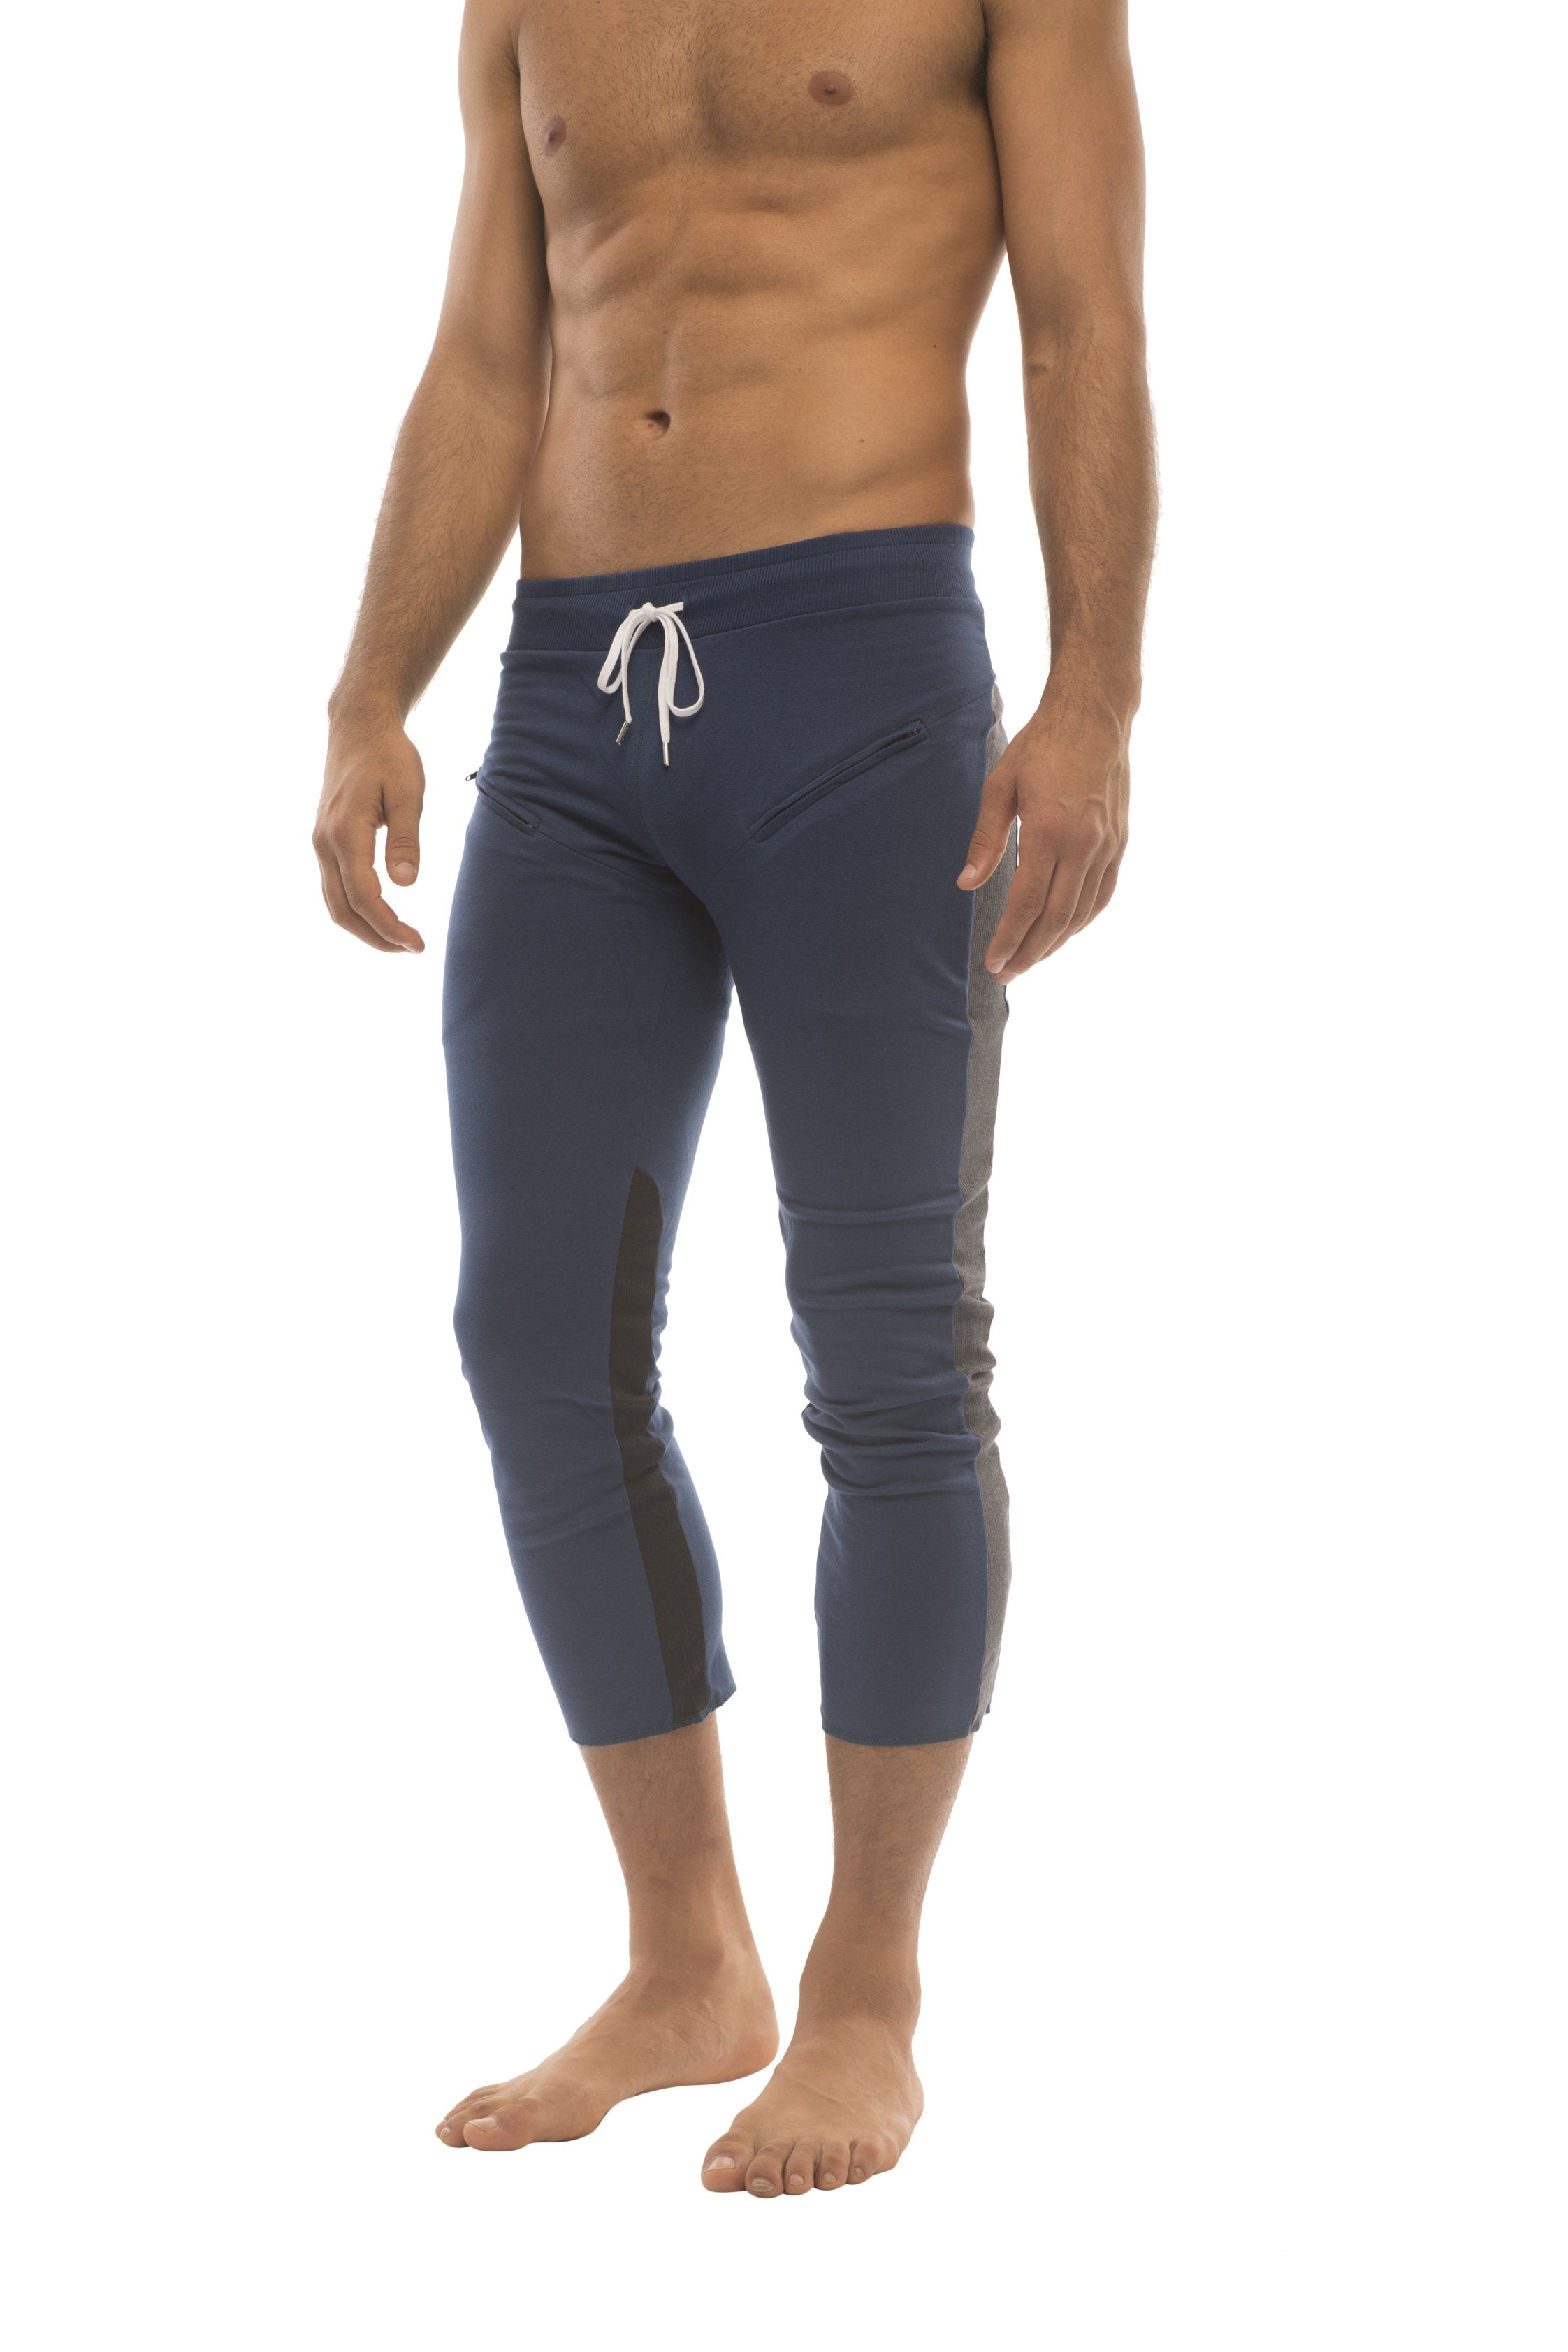 Mens 4/5 Zipper Pocket Capri Yoga Pants (Royal w/Charcoal & Black) - 4-rth